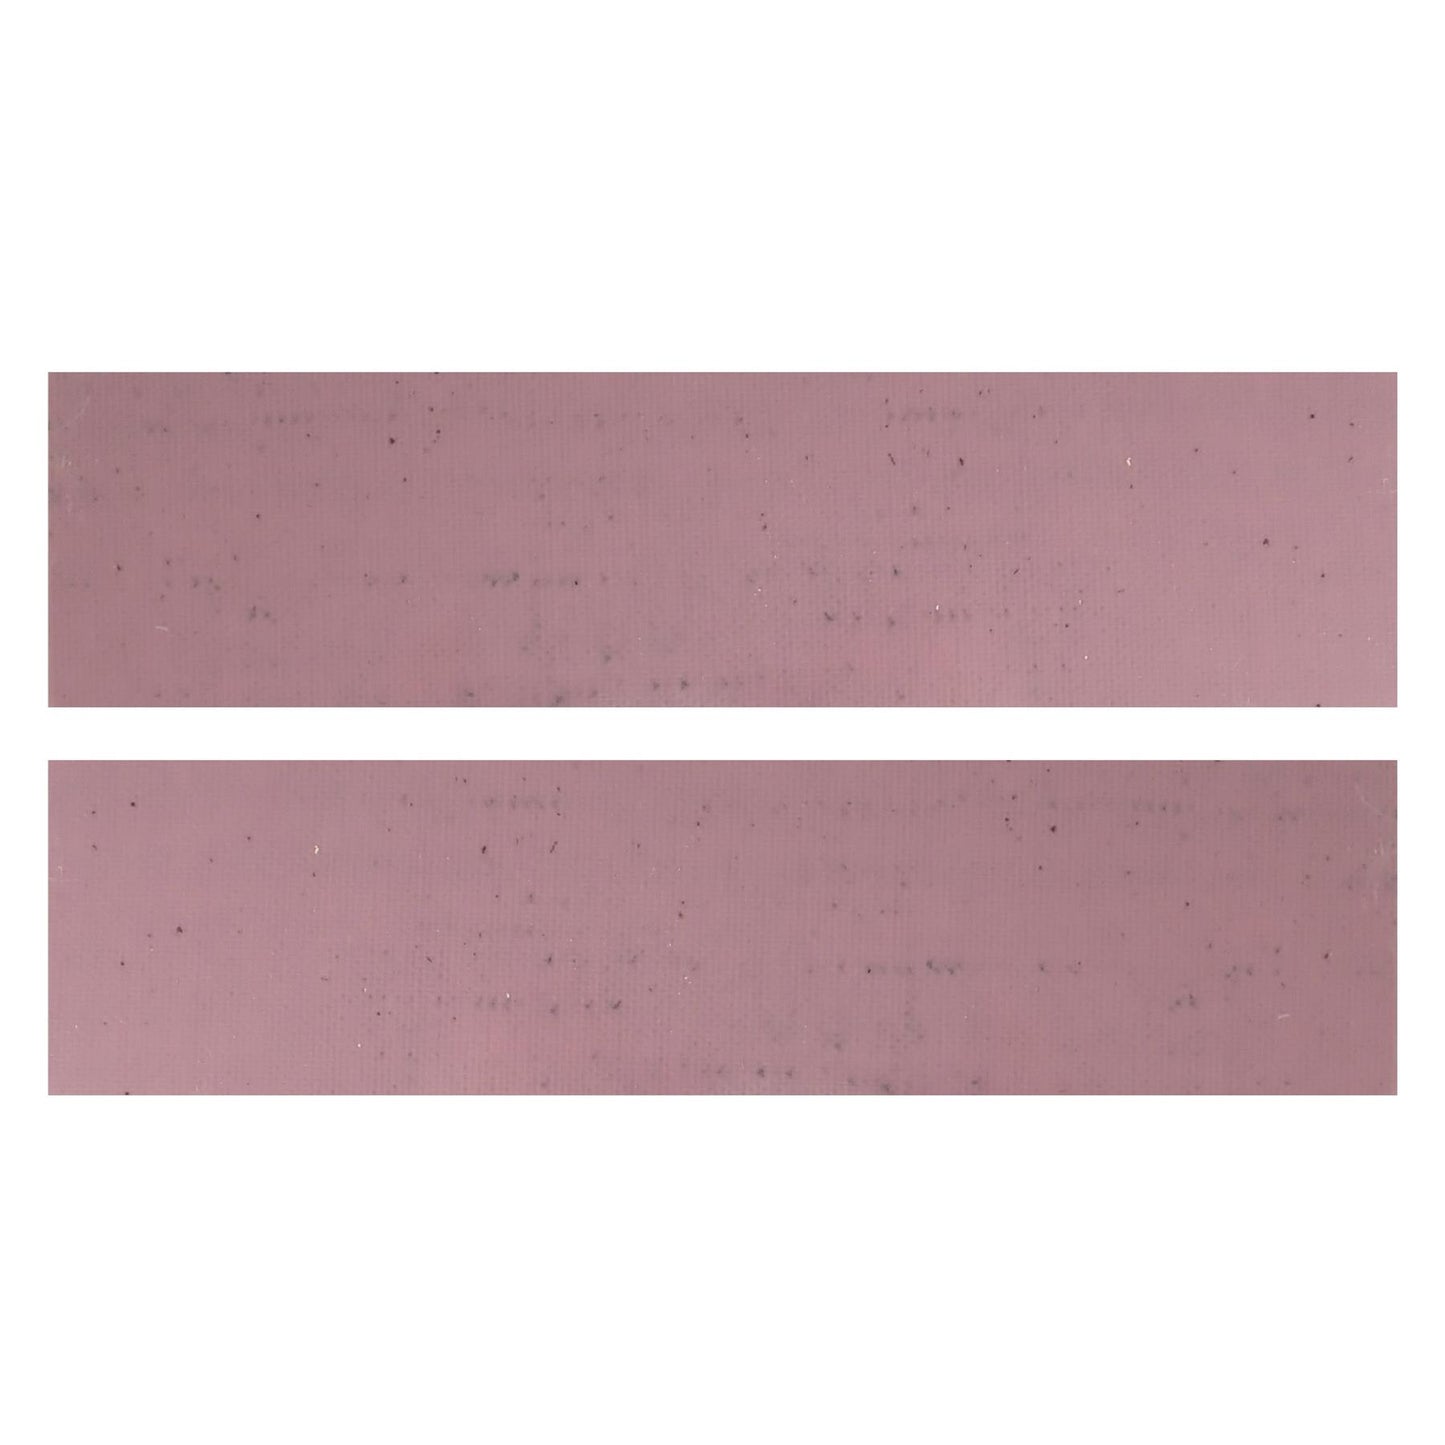 [Turners' Mill] Black & Pink G10 Knife Scales (Pair) - 152.4x38.1x6.35mm